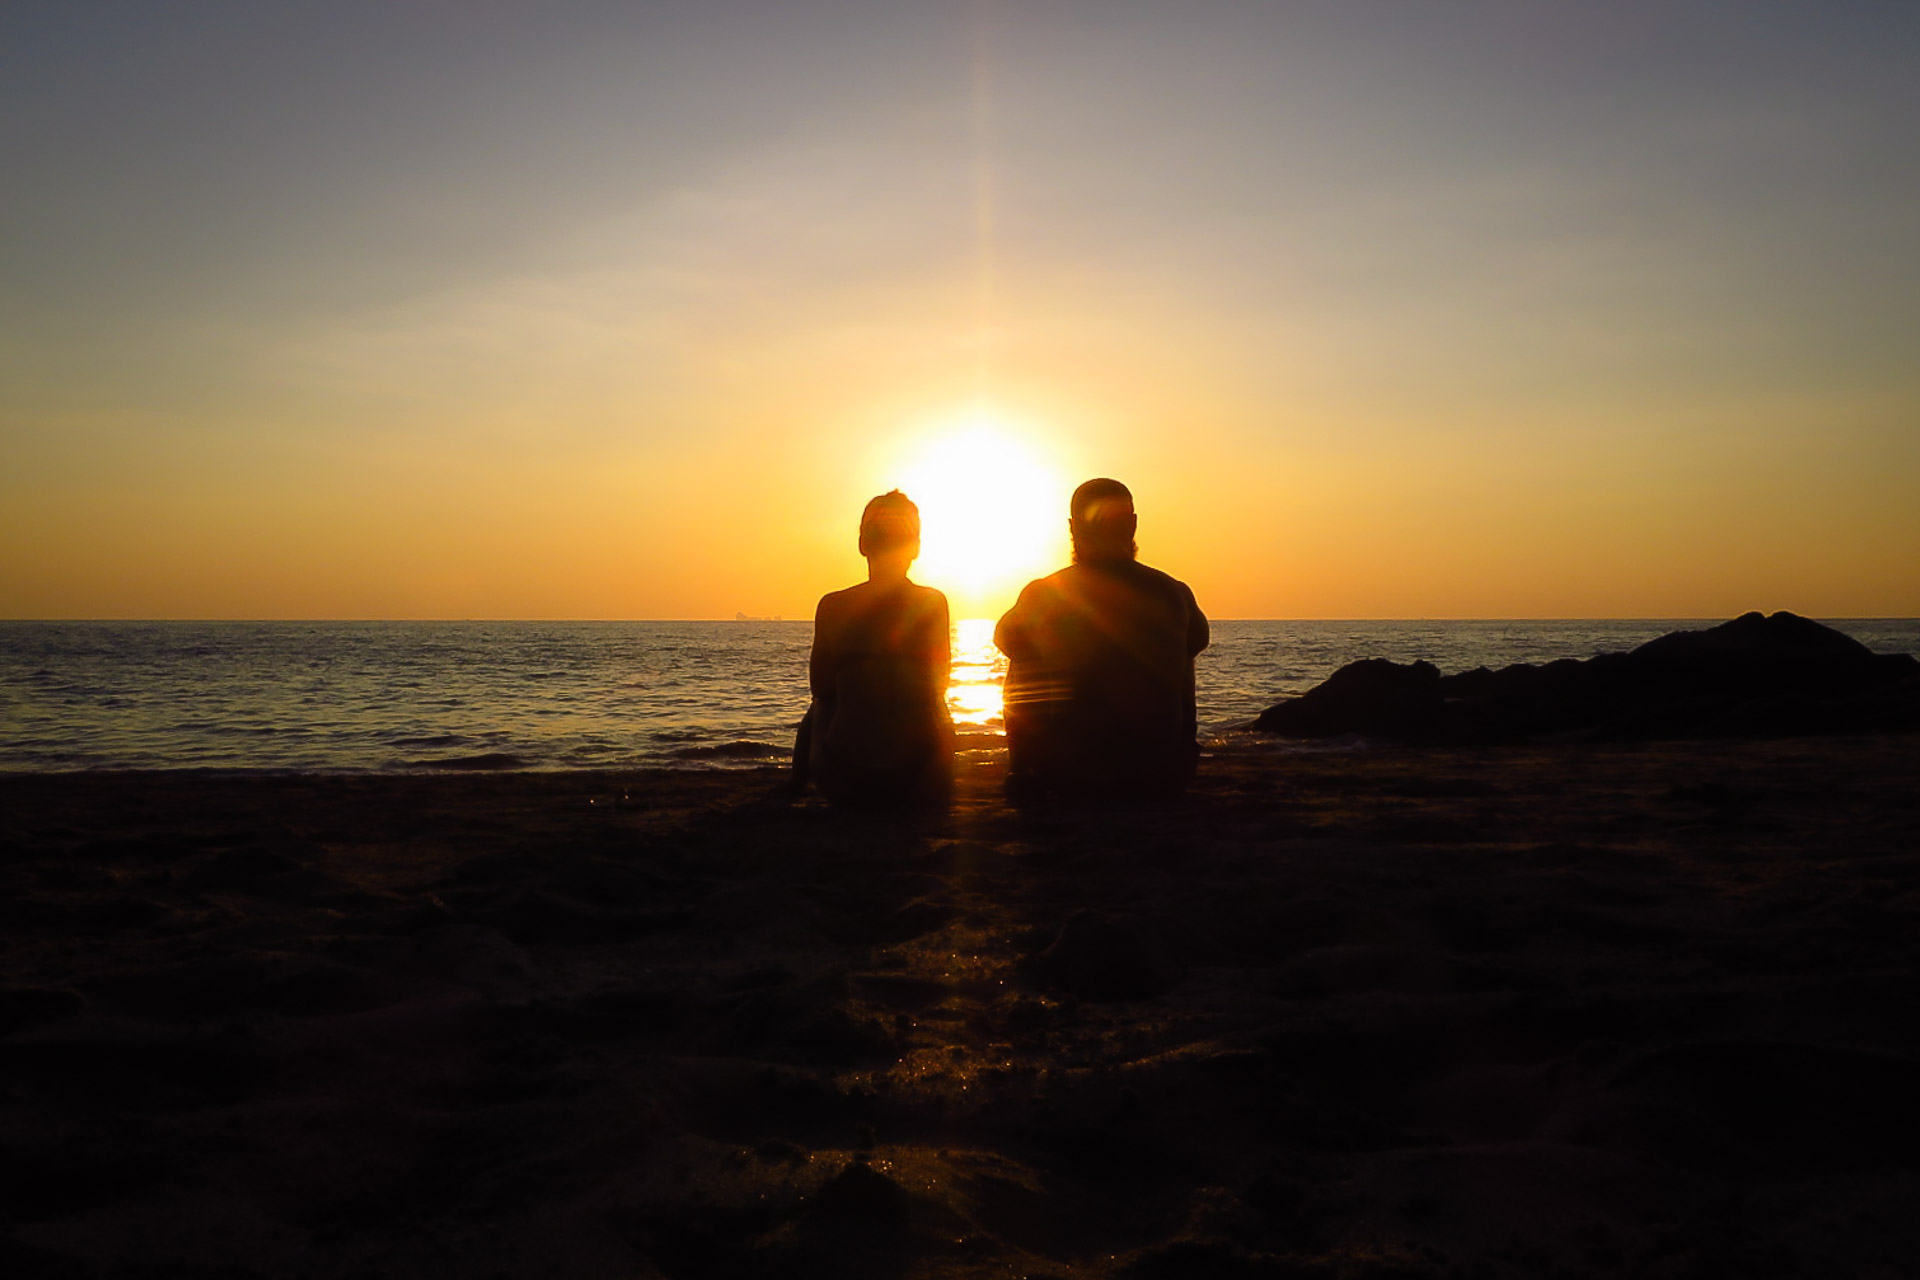 Tiago e Fernanda watching the sunset in a silhouette.